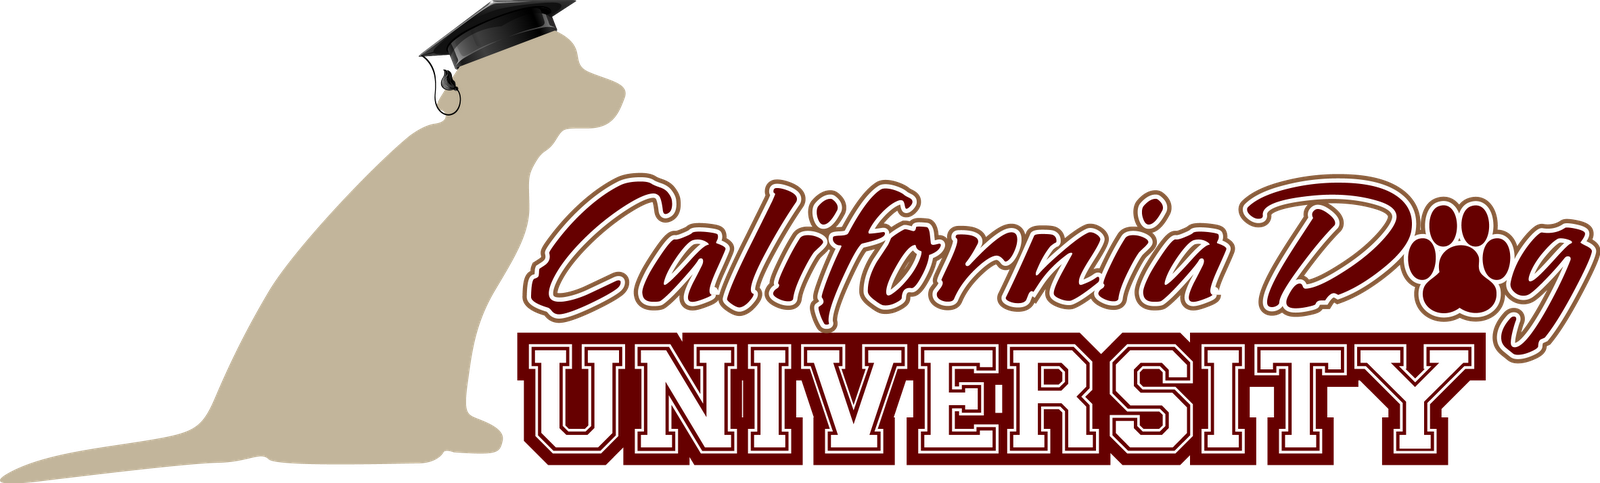 california dog logo.png